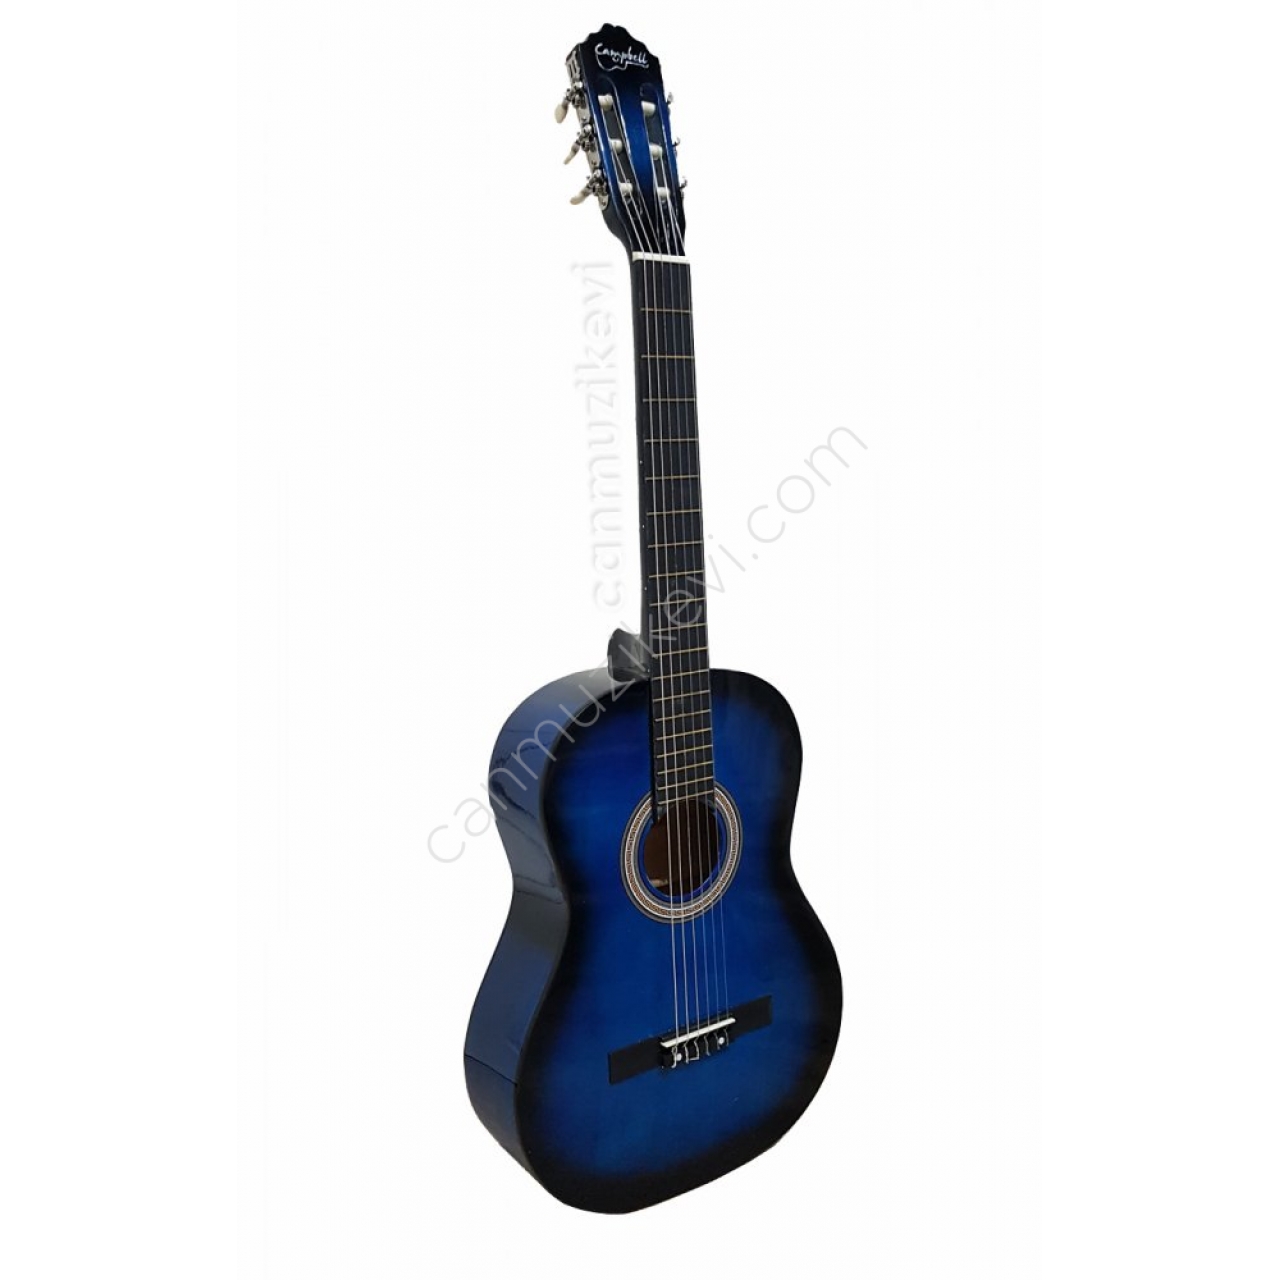 Klasik Gitar Seti Mavi Hediyeli